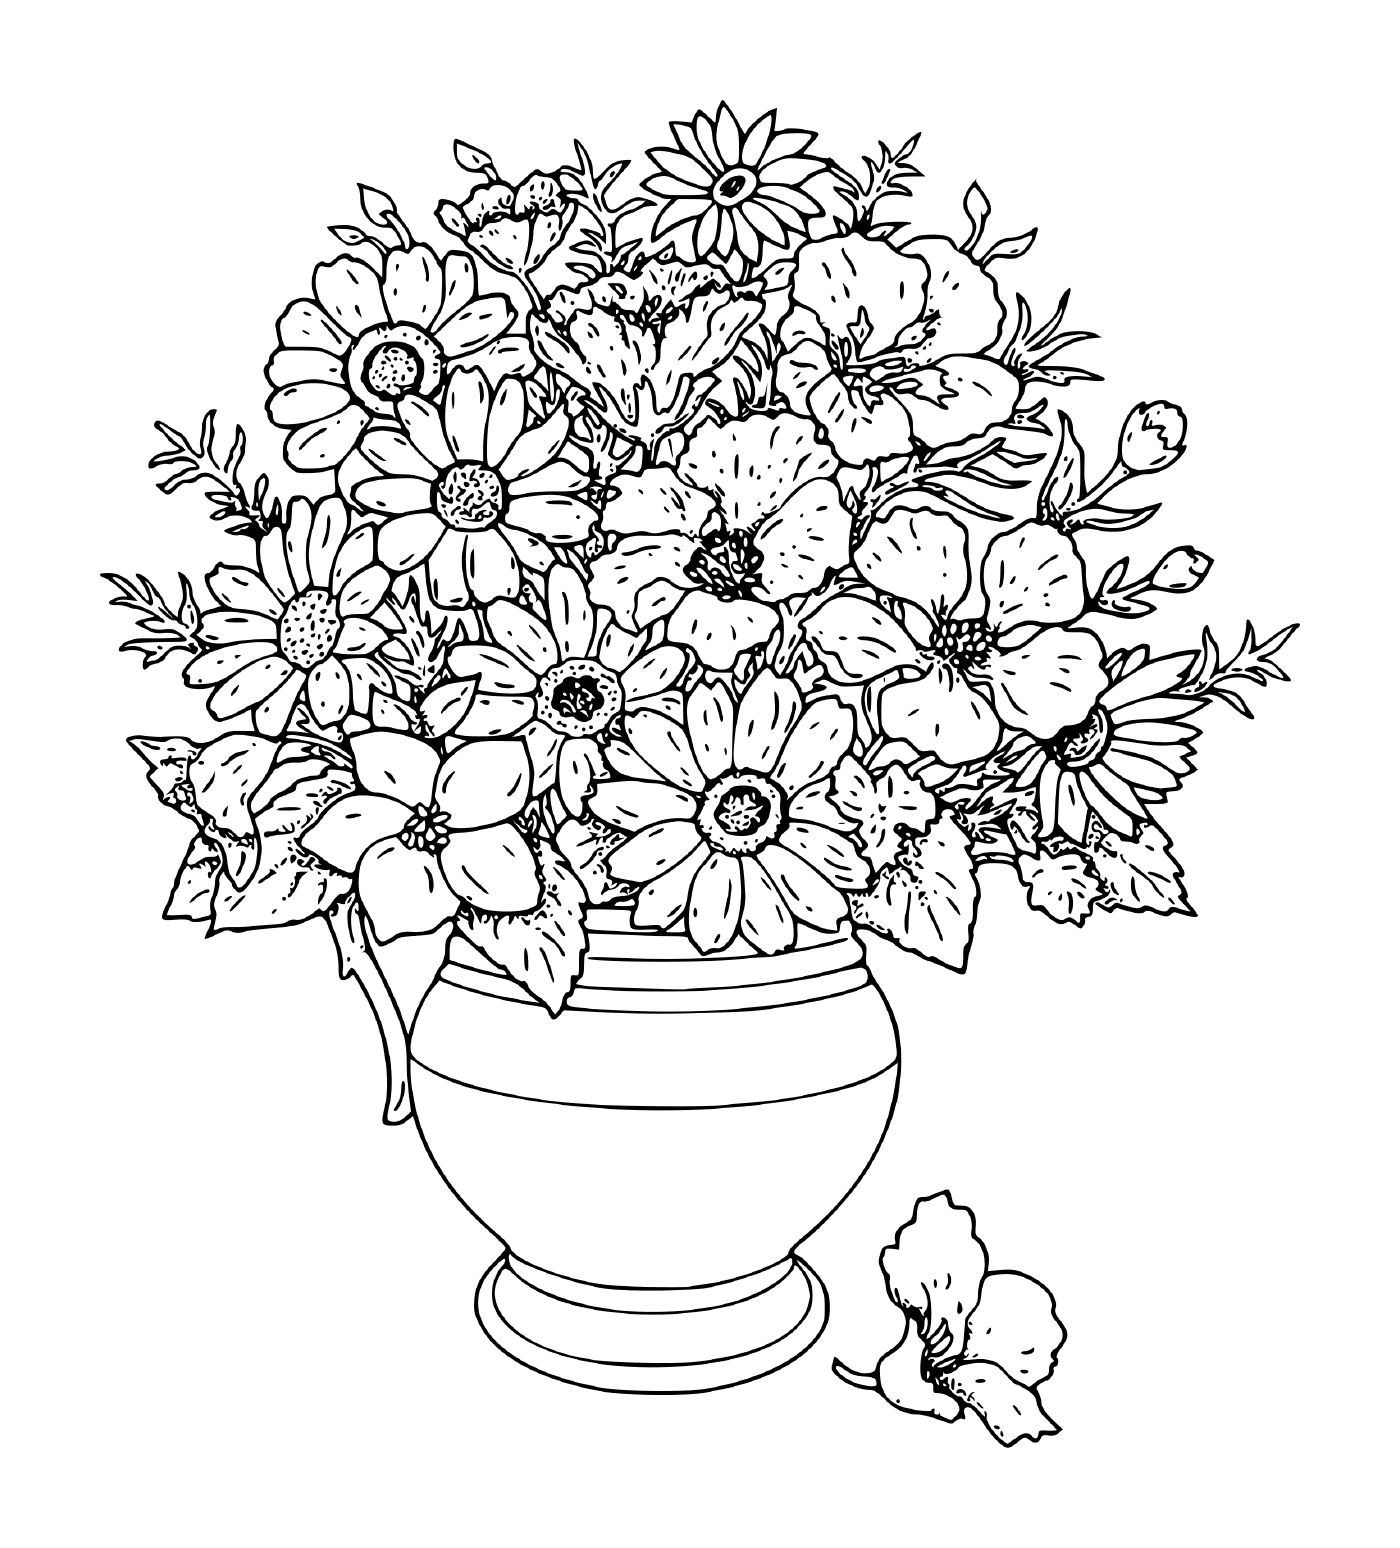  Цветы в вазе 